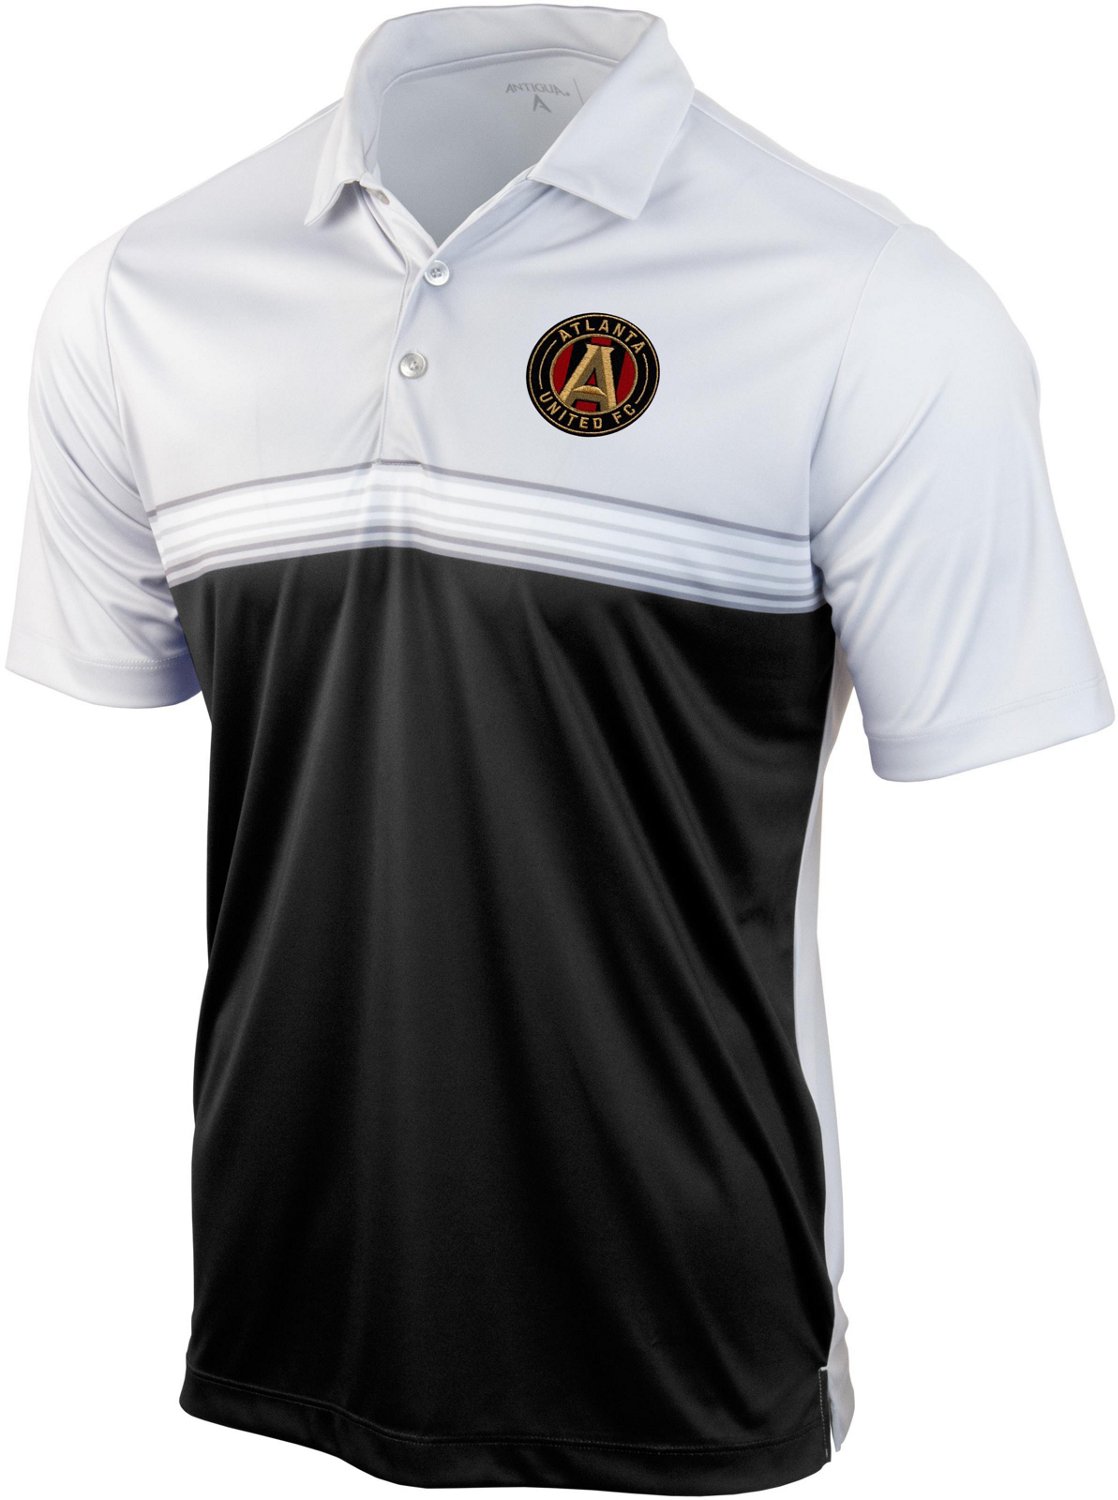 MLS Atlanta United FC Women's 3/4 Sleeve Tri-Blend T-Shirt - S